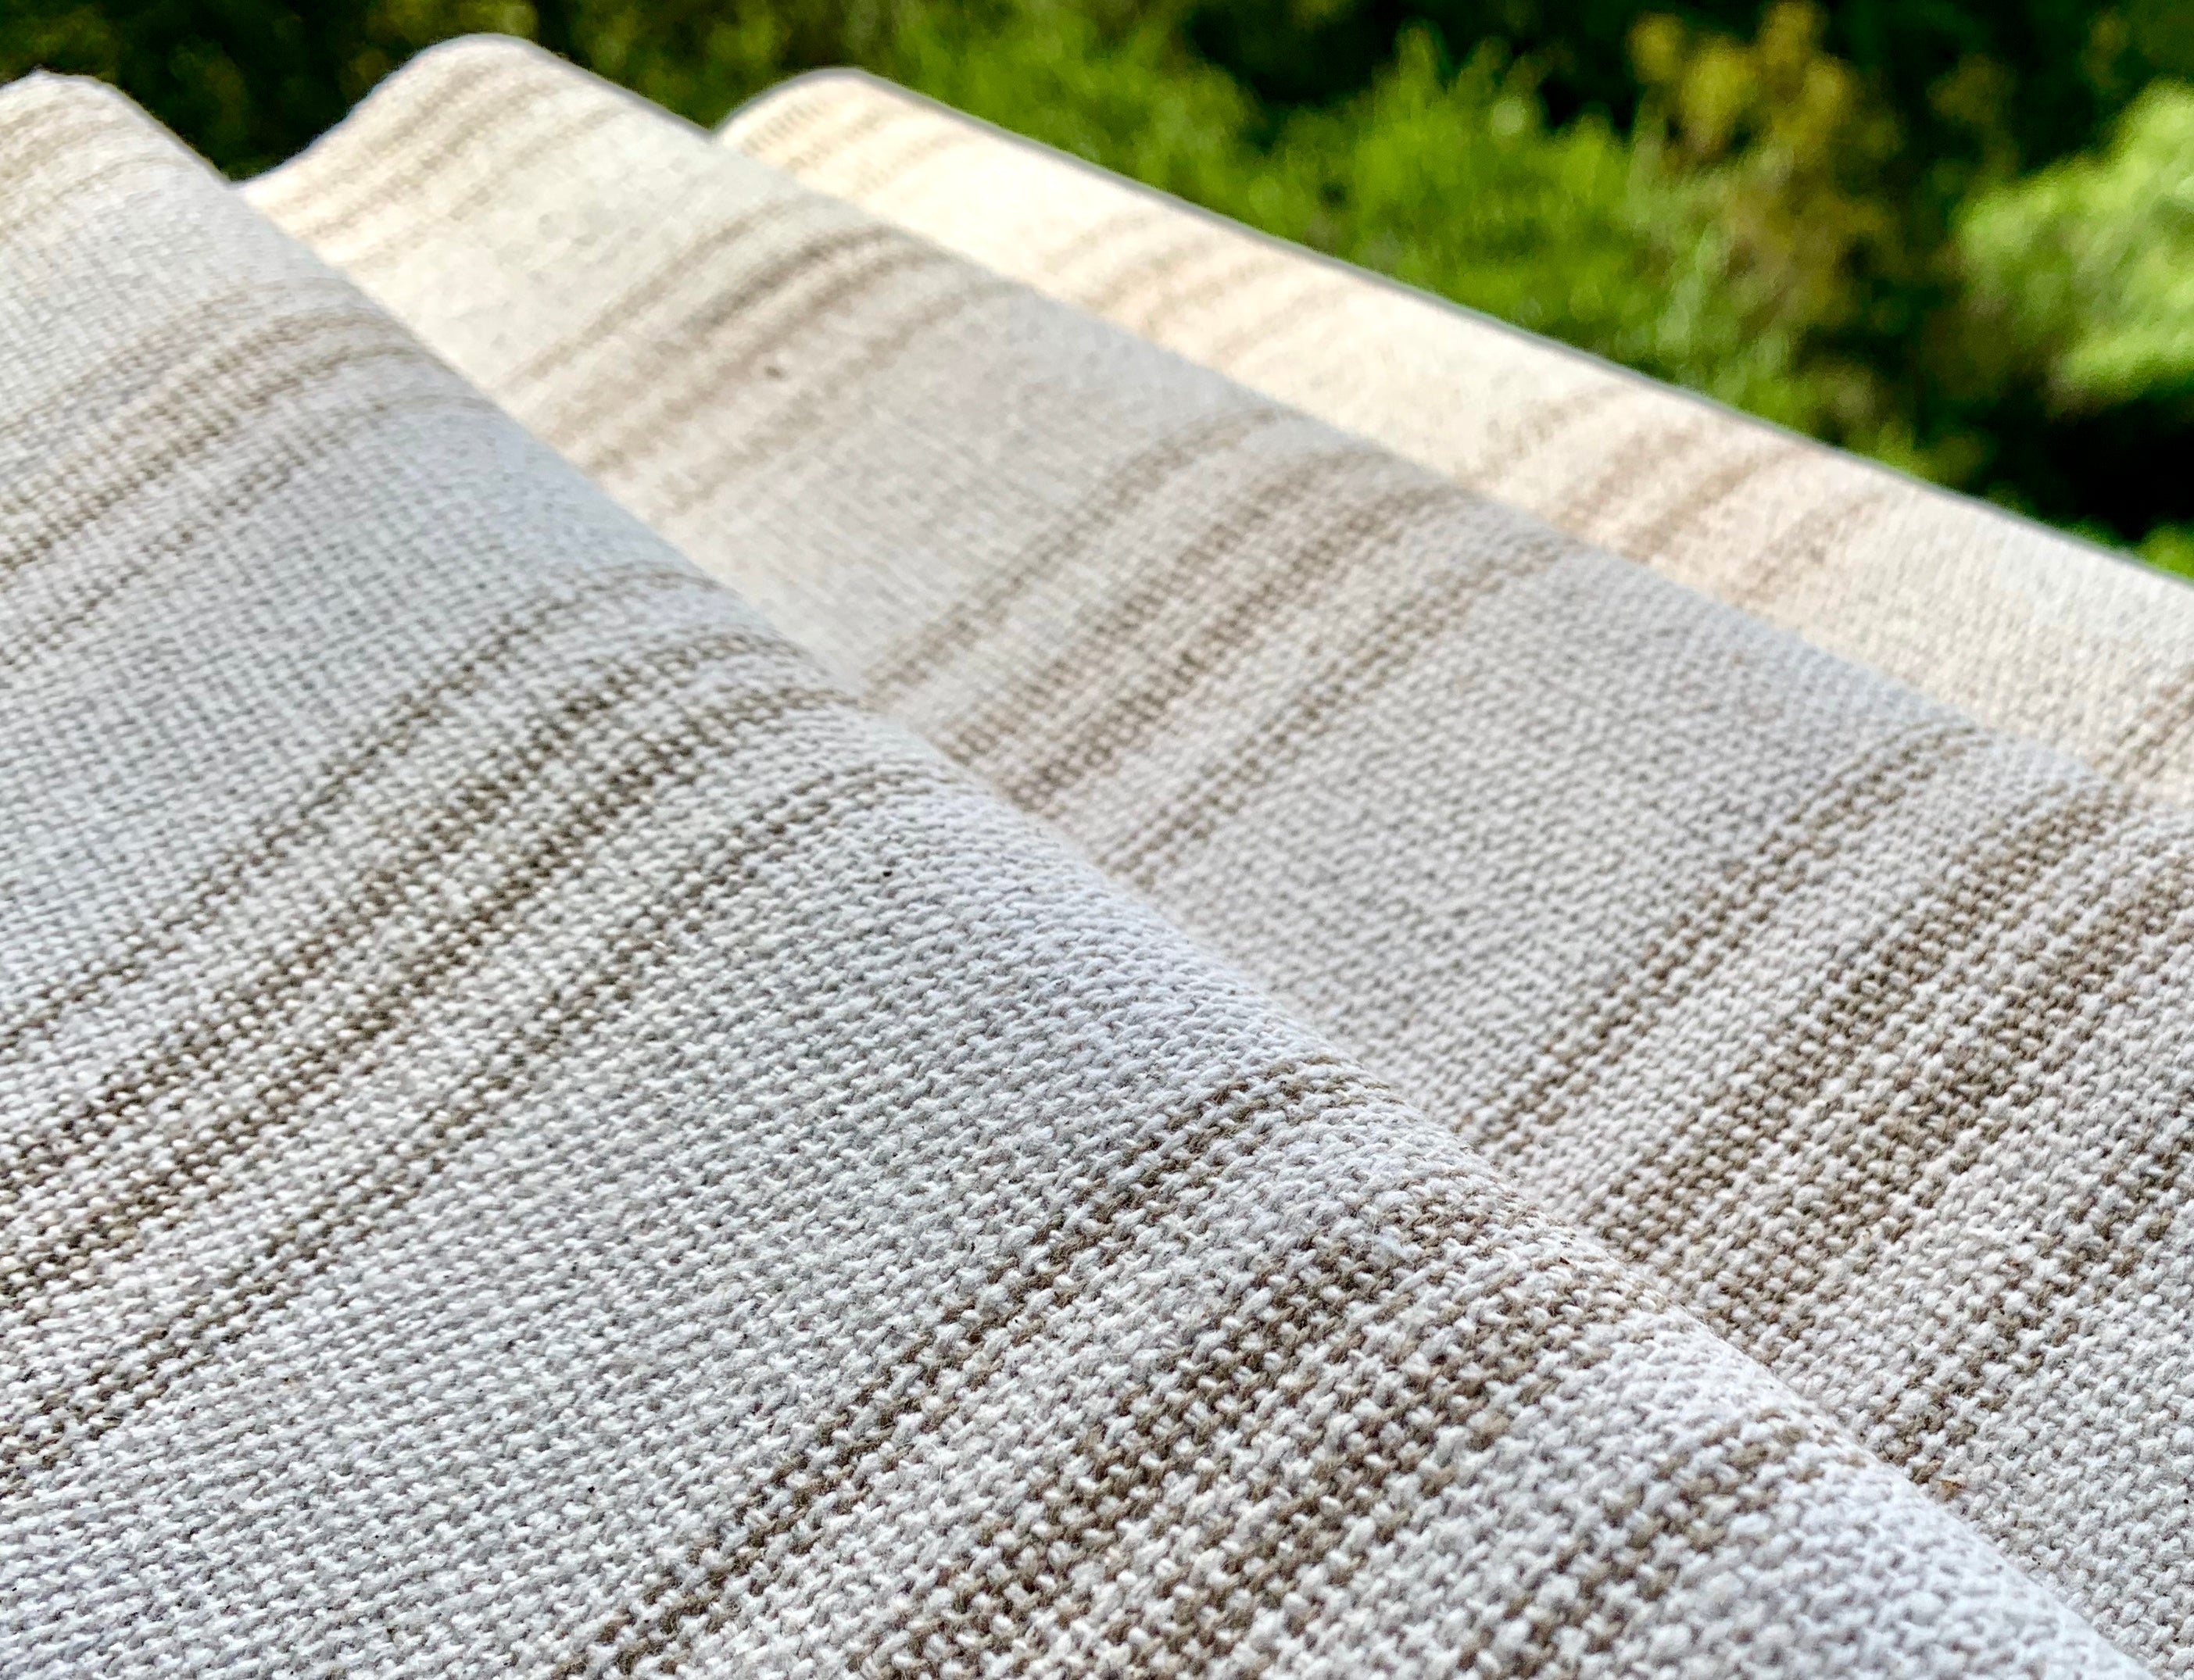 Grain Sack Fabric - Tan Multi Stripes on Cream